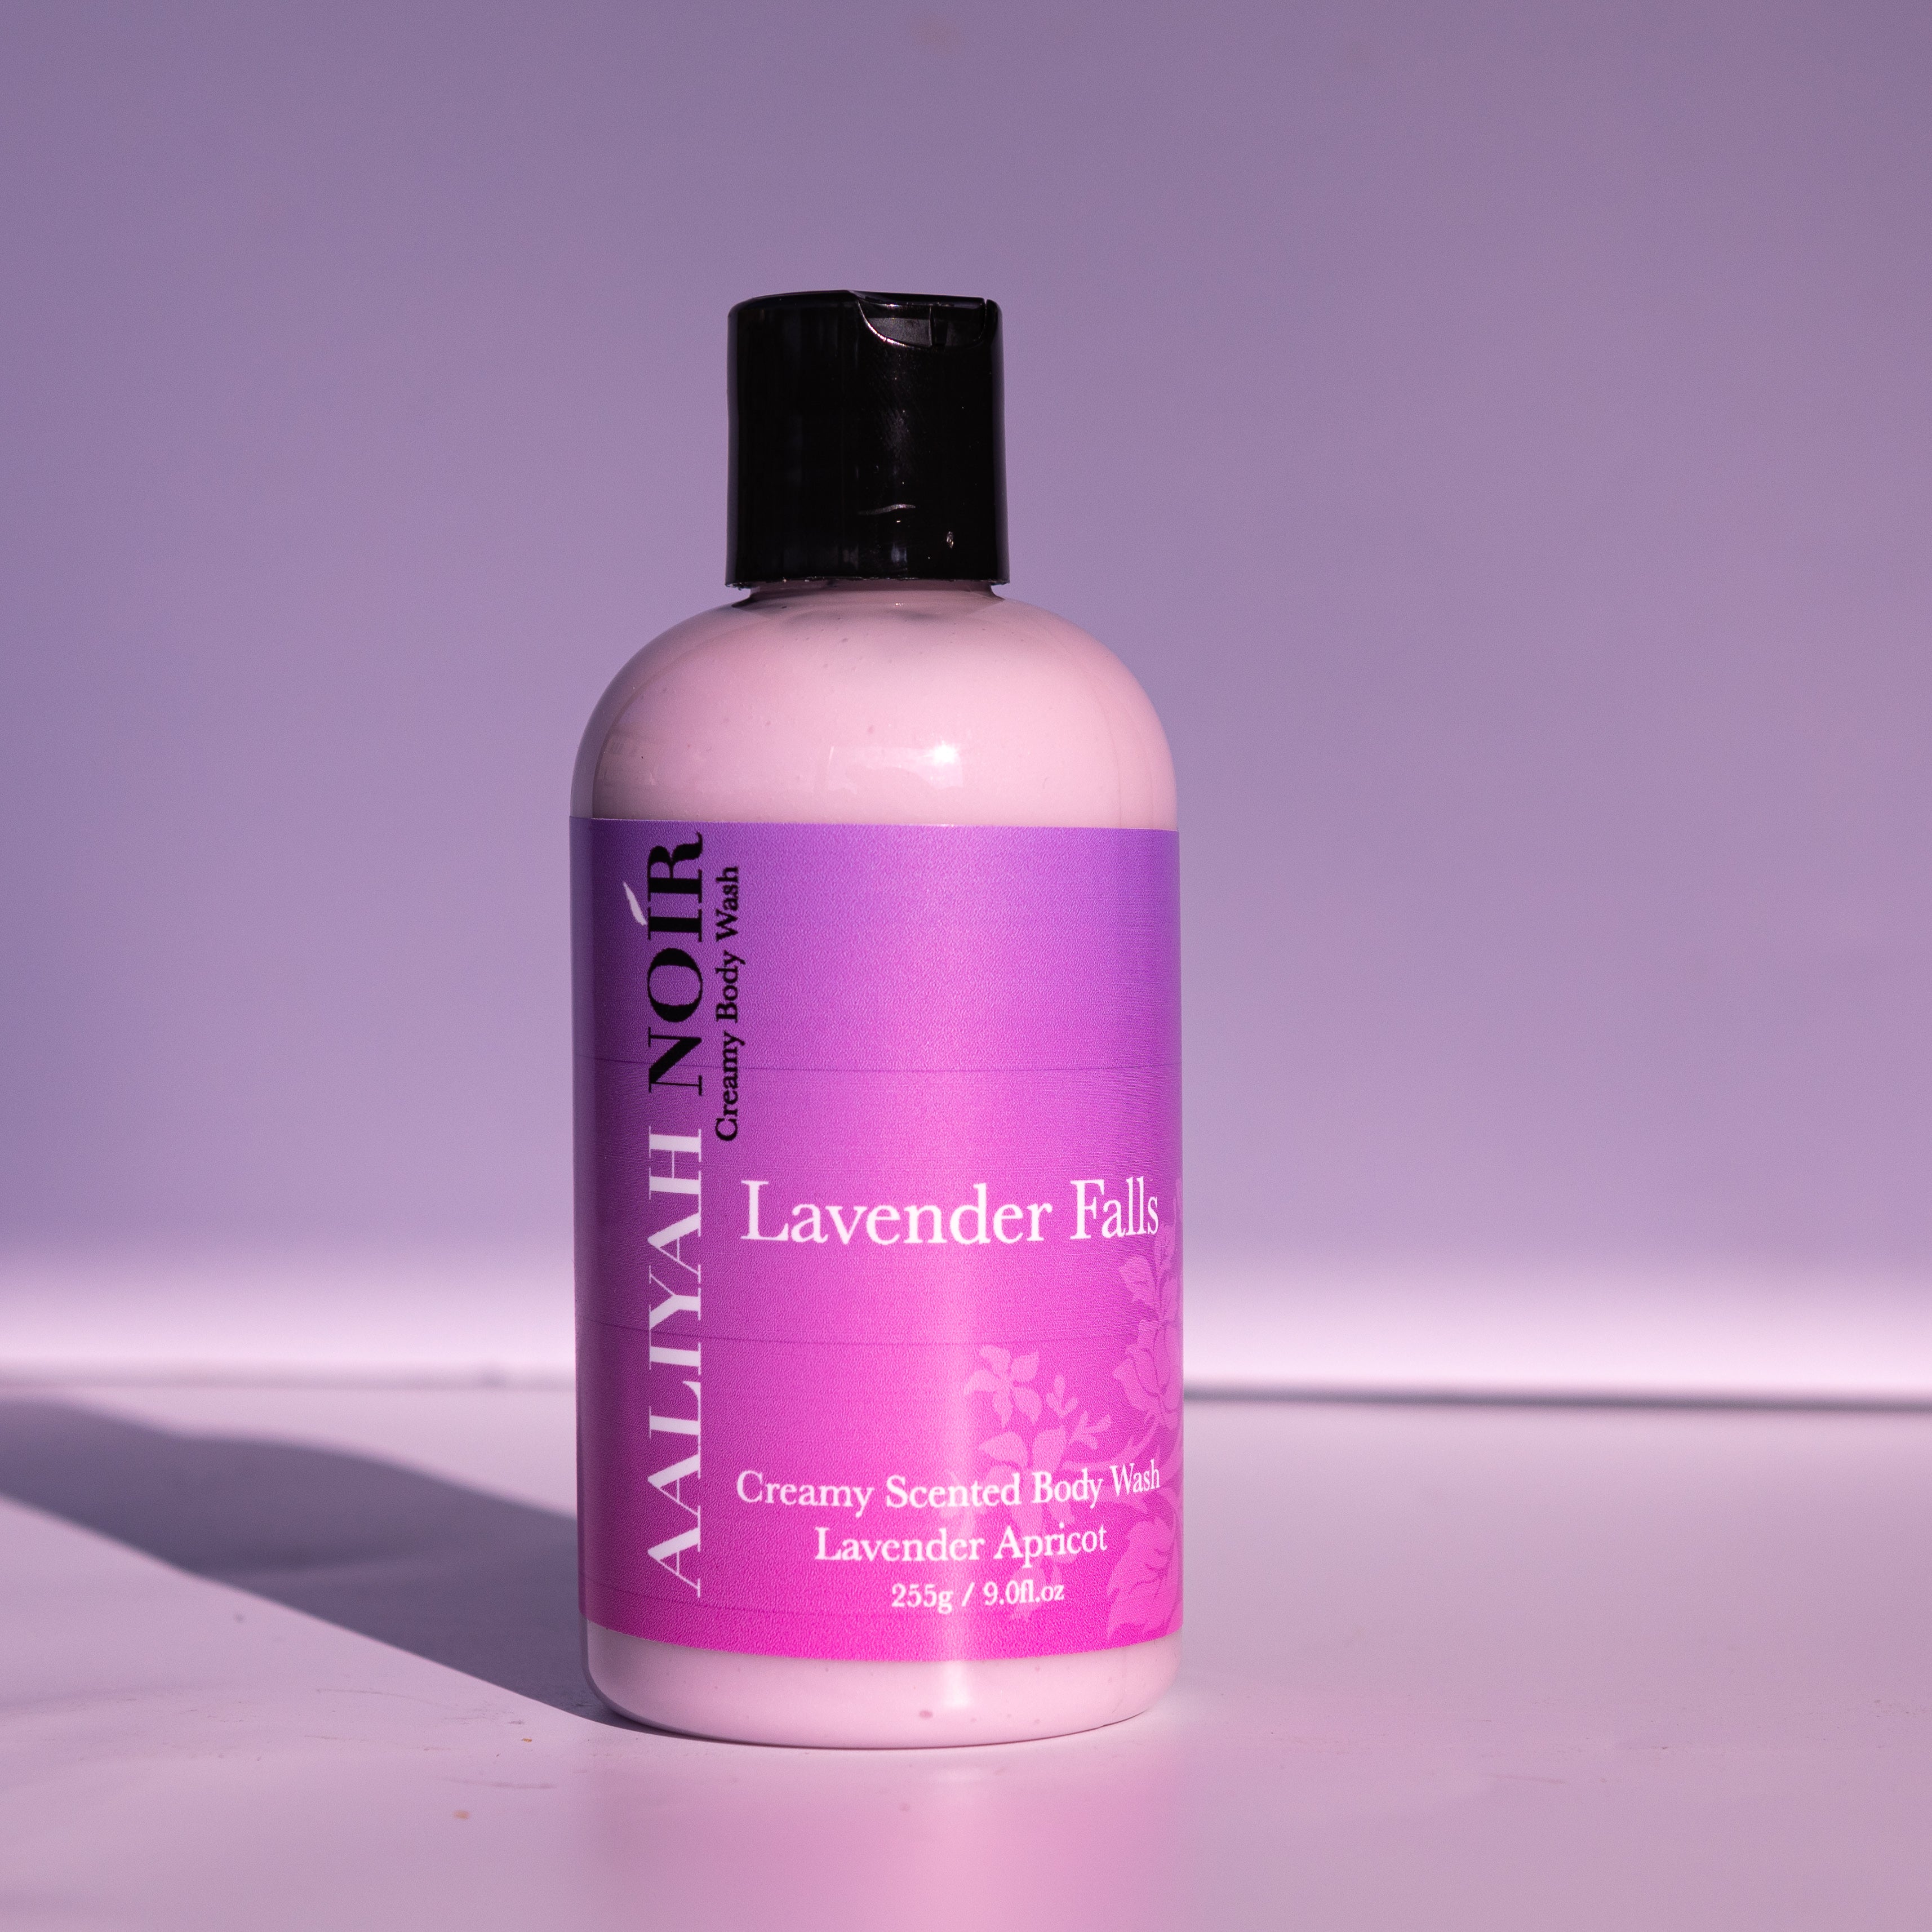 Lavender Falls Creamy Body Wash